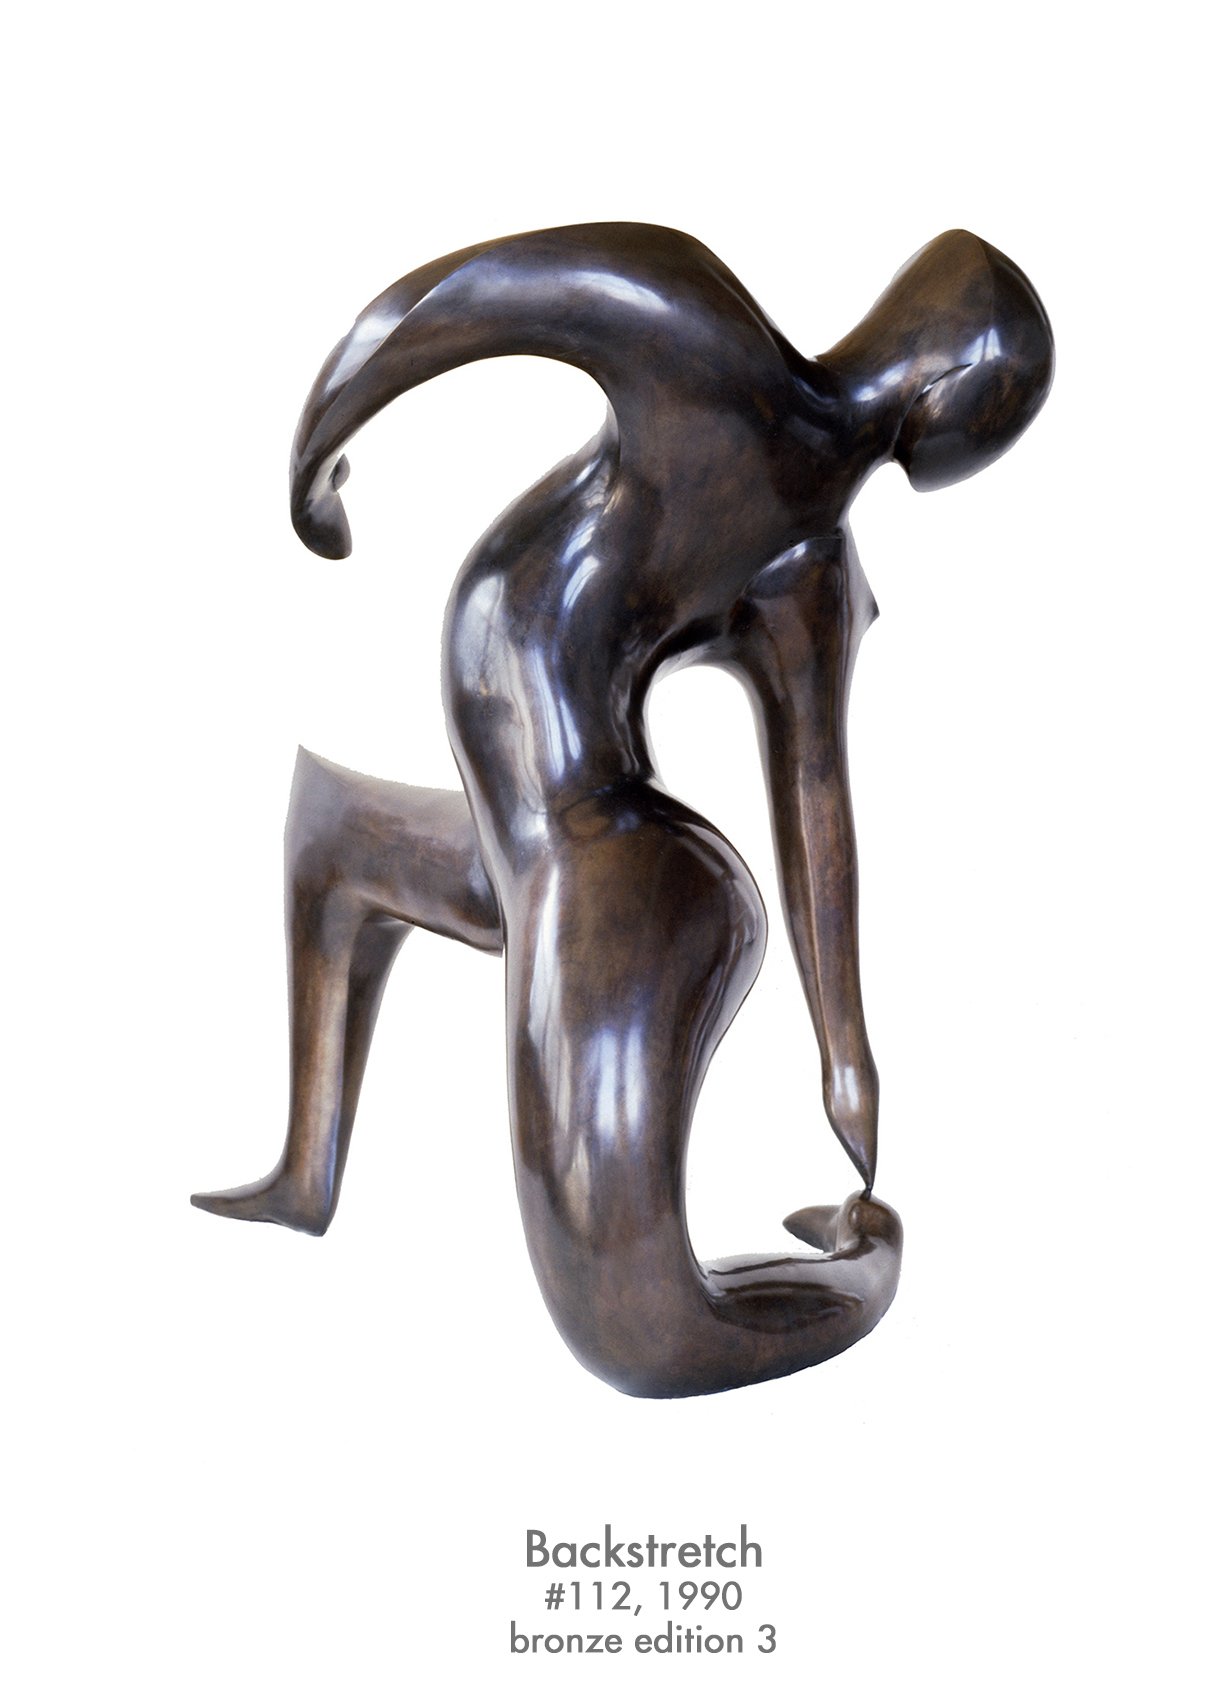 Backstretch, 1990, bronze, #112